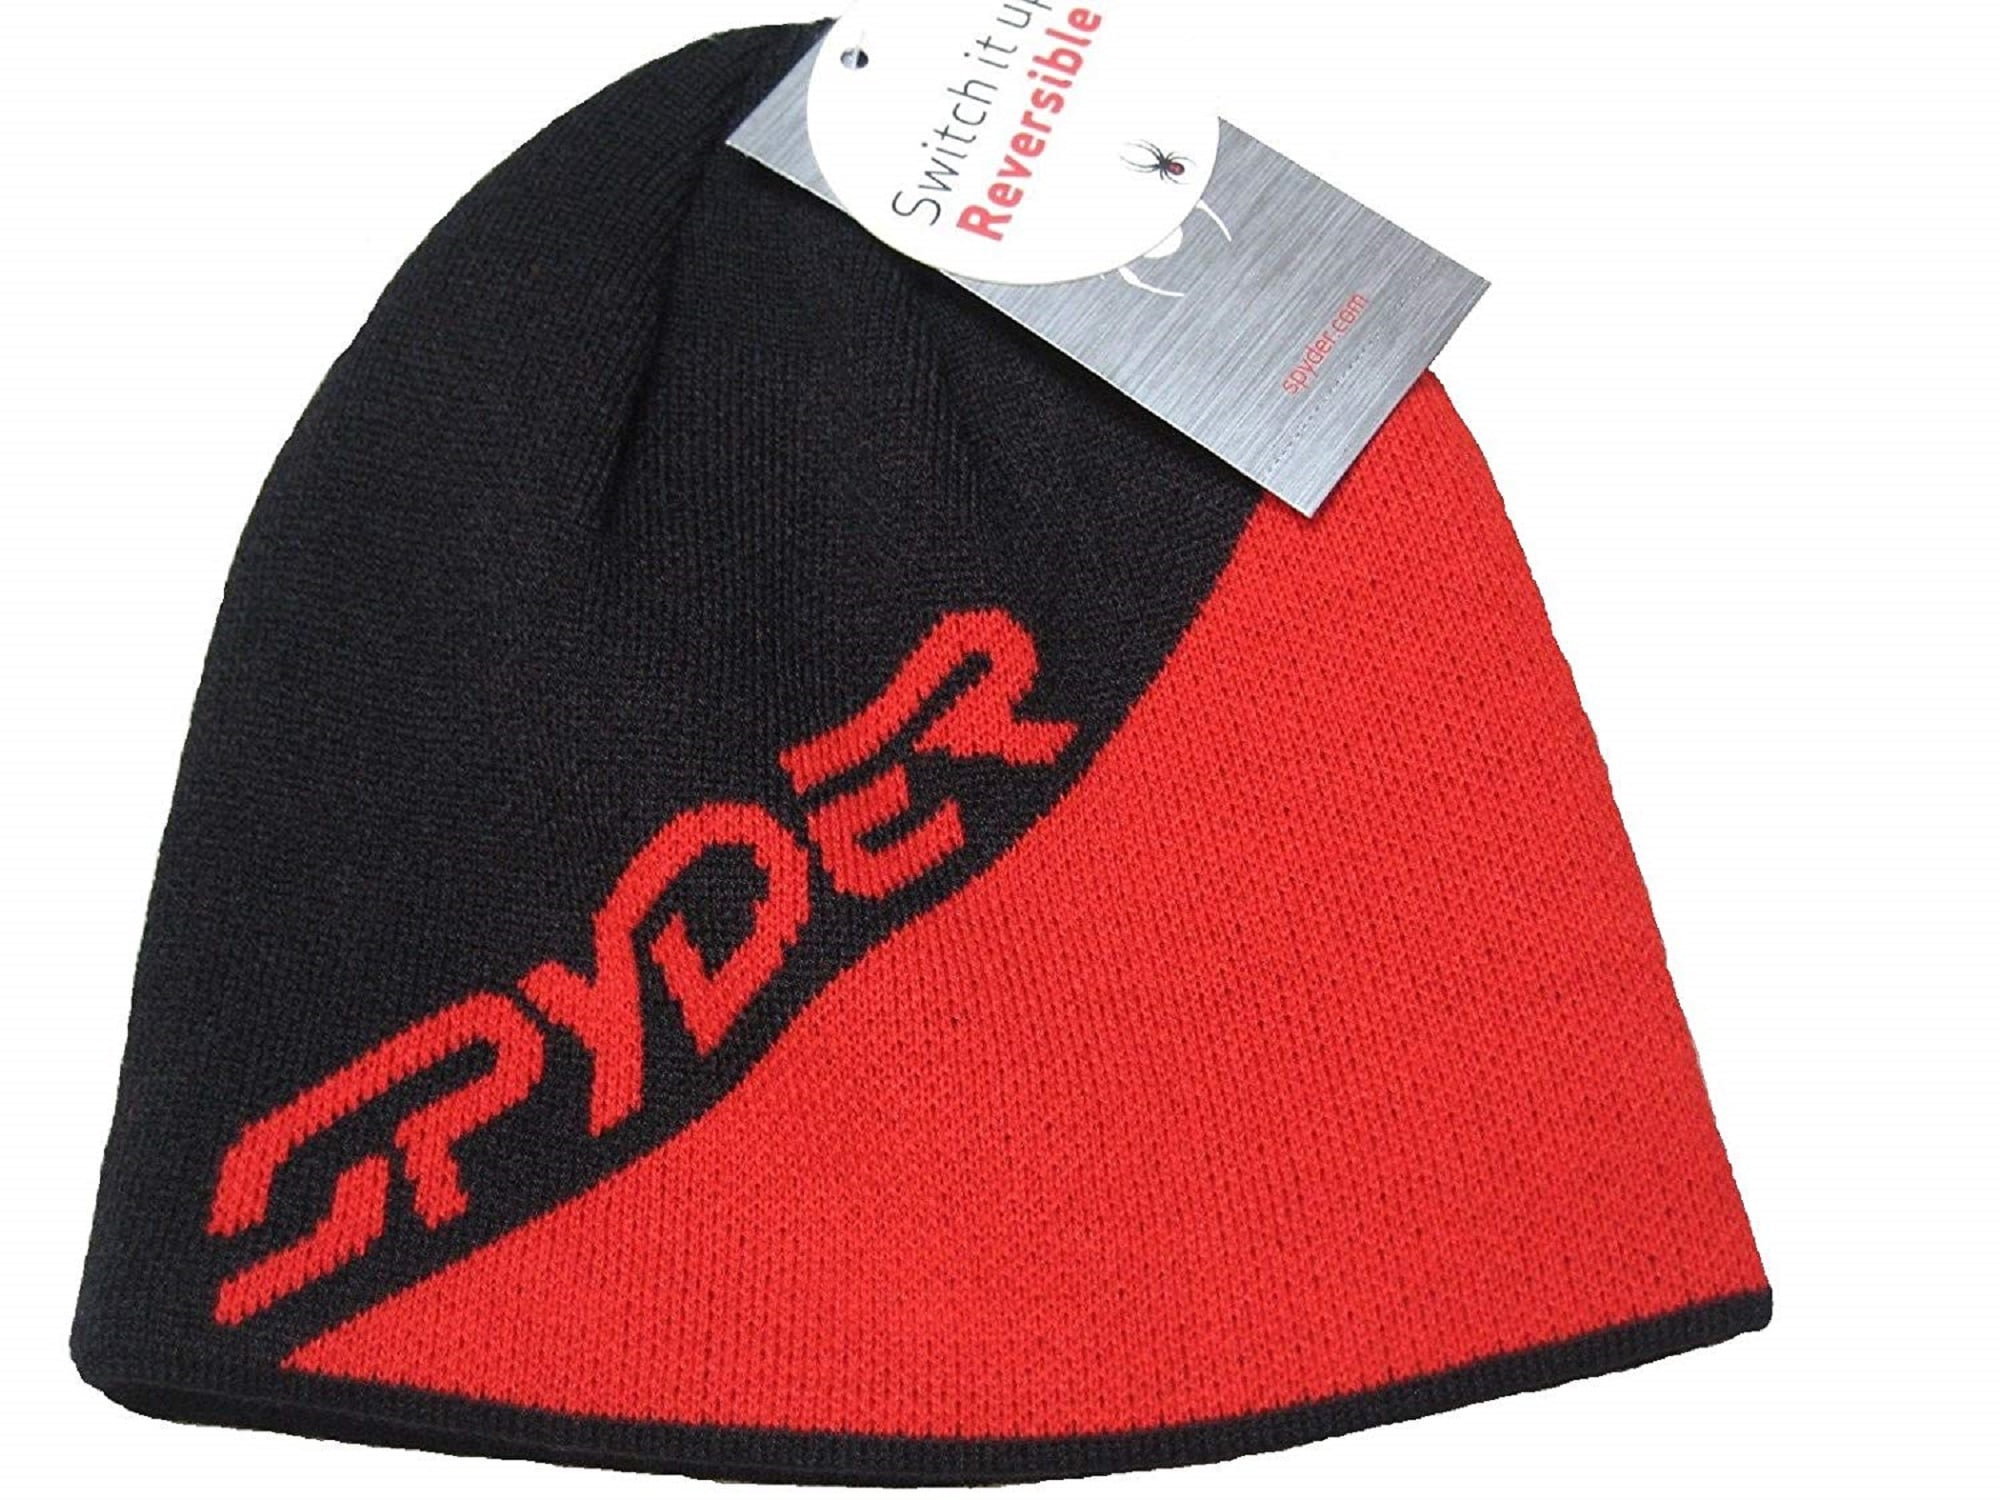 Spyder Men's Reversible Jacquard Logo Red/Black, One Size